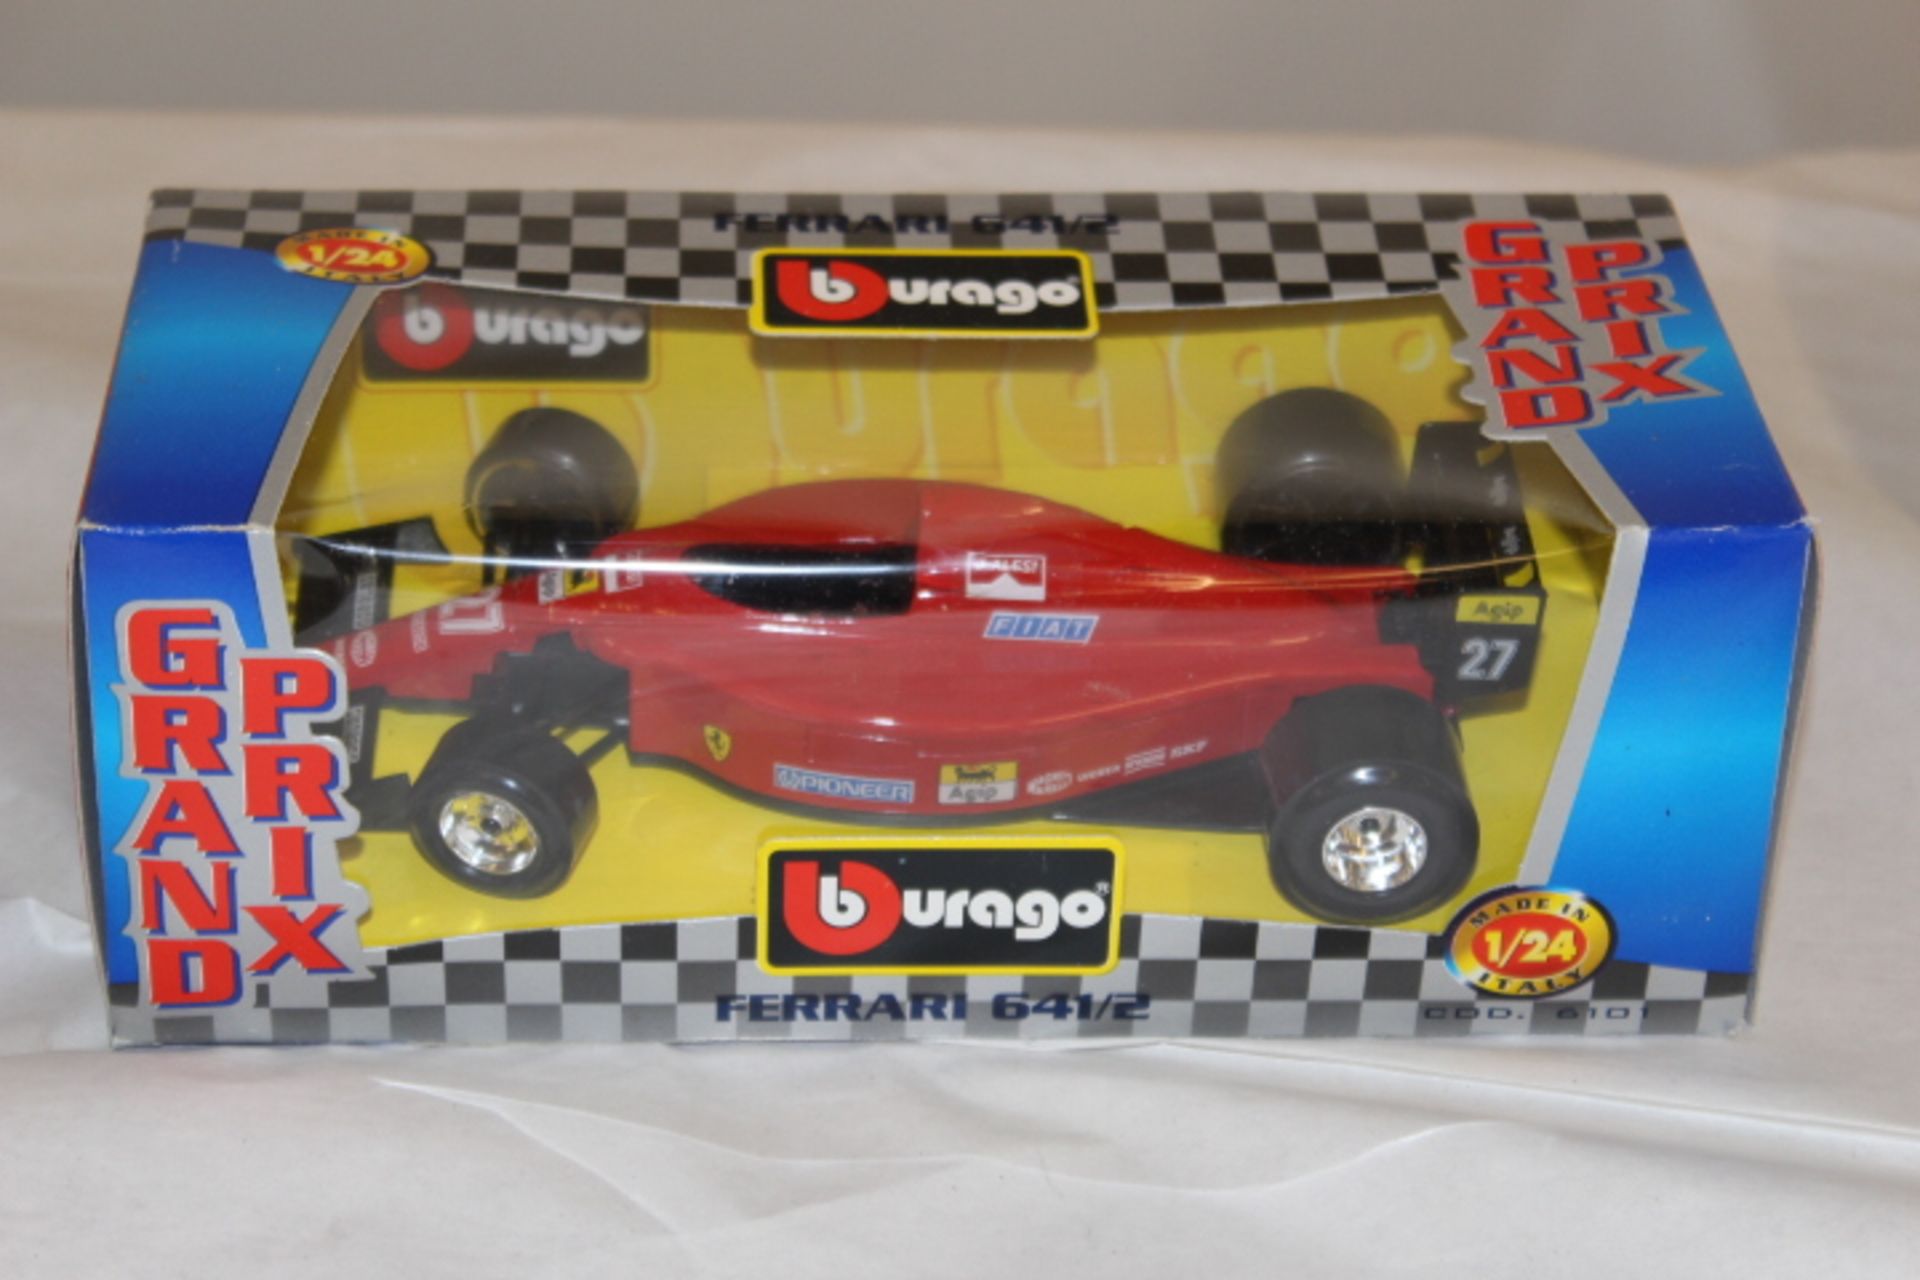 Burago Grand Prix Ferrari 641/2 collectable model car - Image 2 of 2